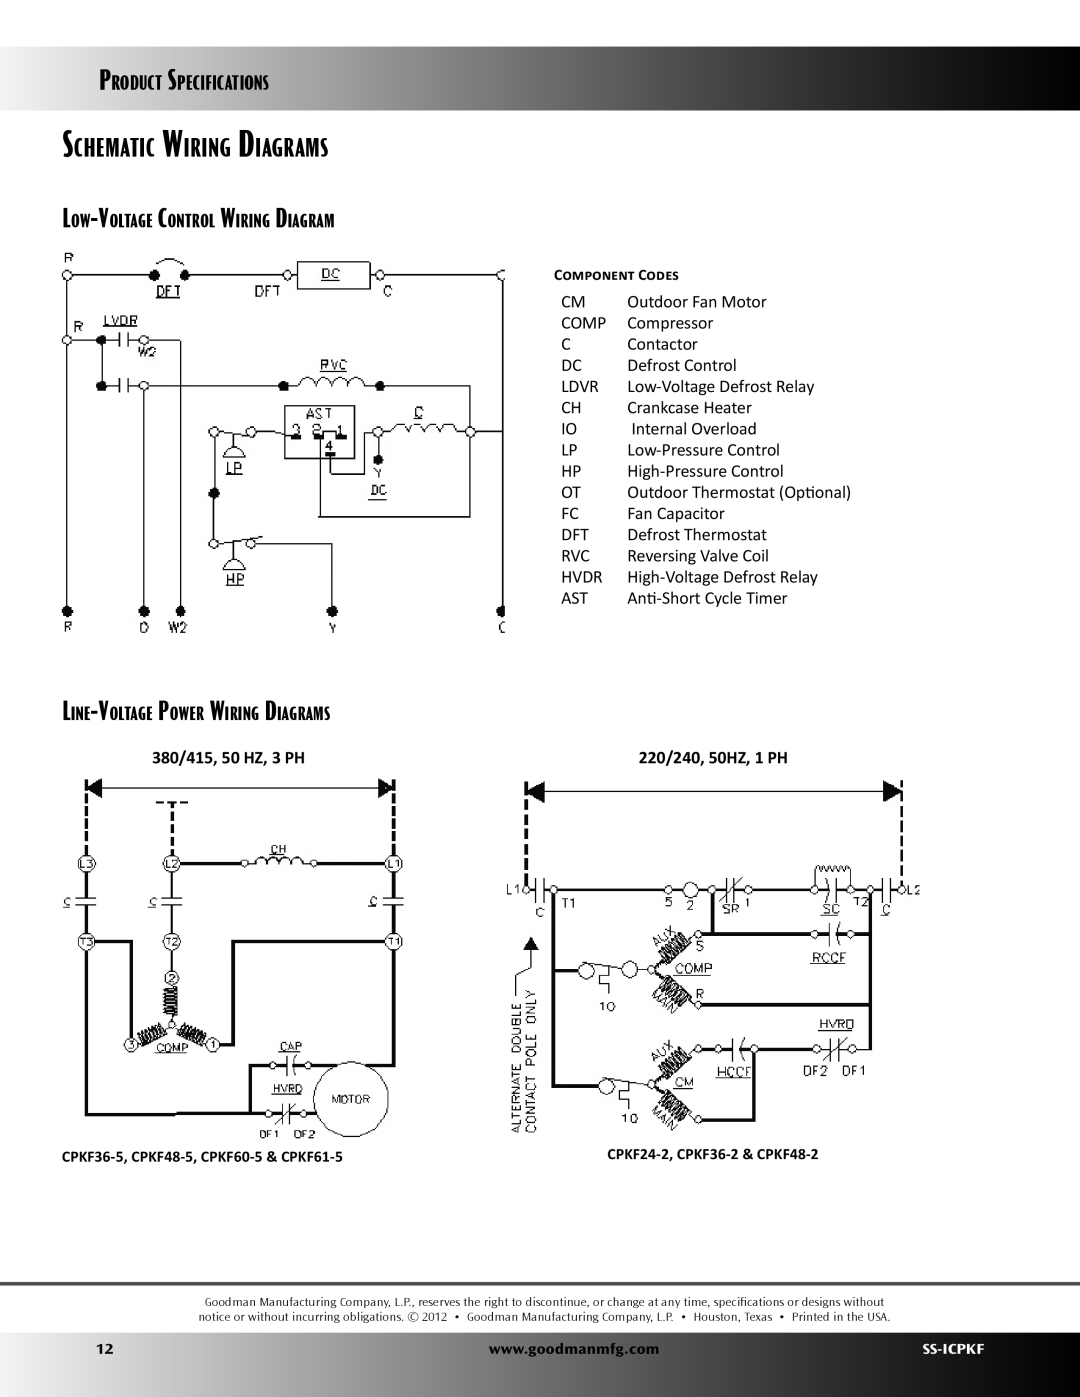 Goodman Mfg SS-ICPKF Schematic Wiring Diagrams, Low-Voltage Control Wiring Diagram, Line-Voltage Power Wiring Diagrams 